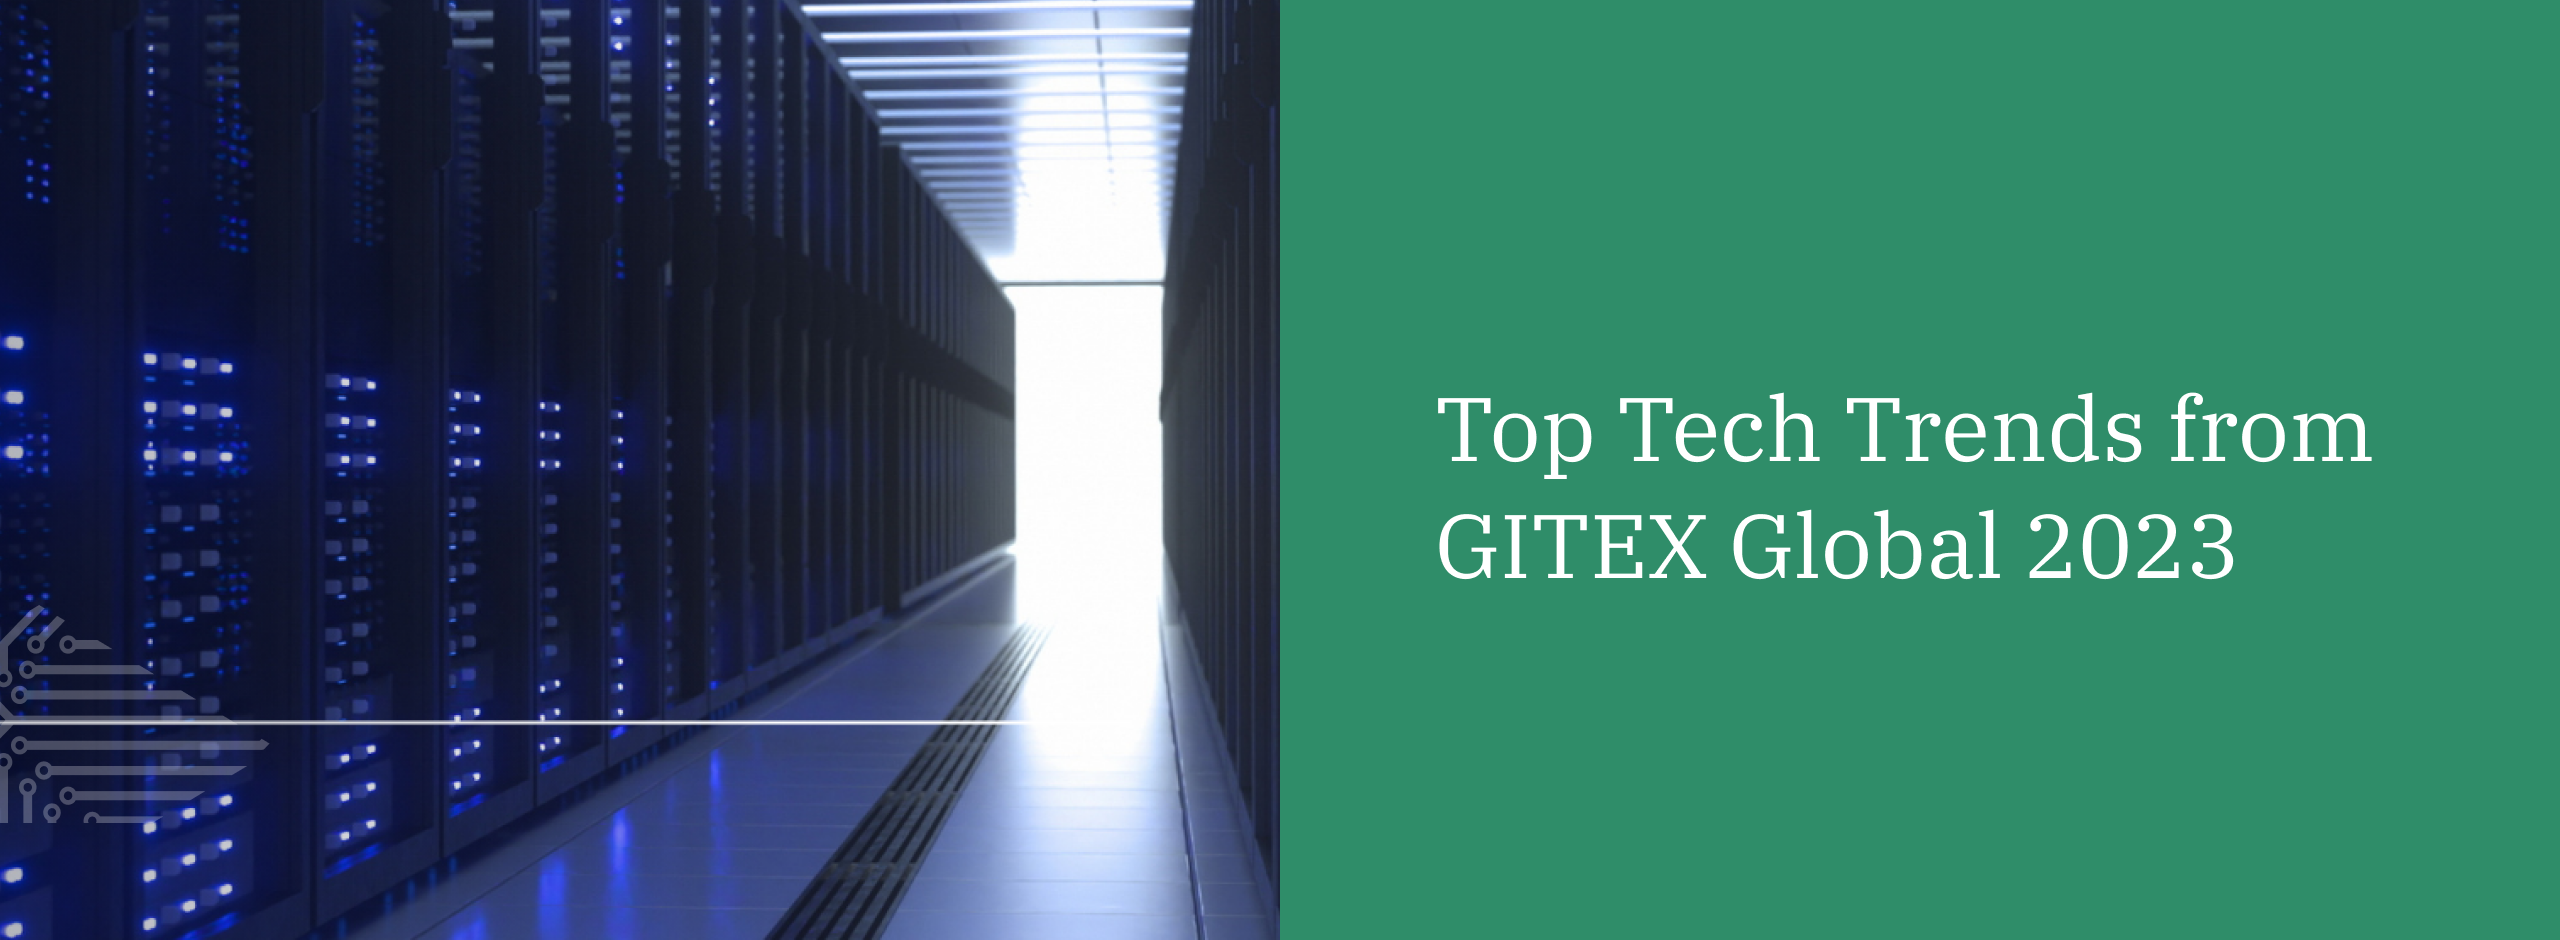 Article top -tech-trends-gitex-global-2023